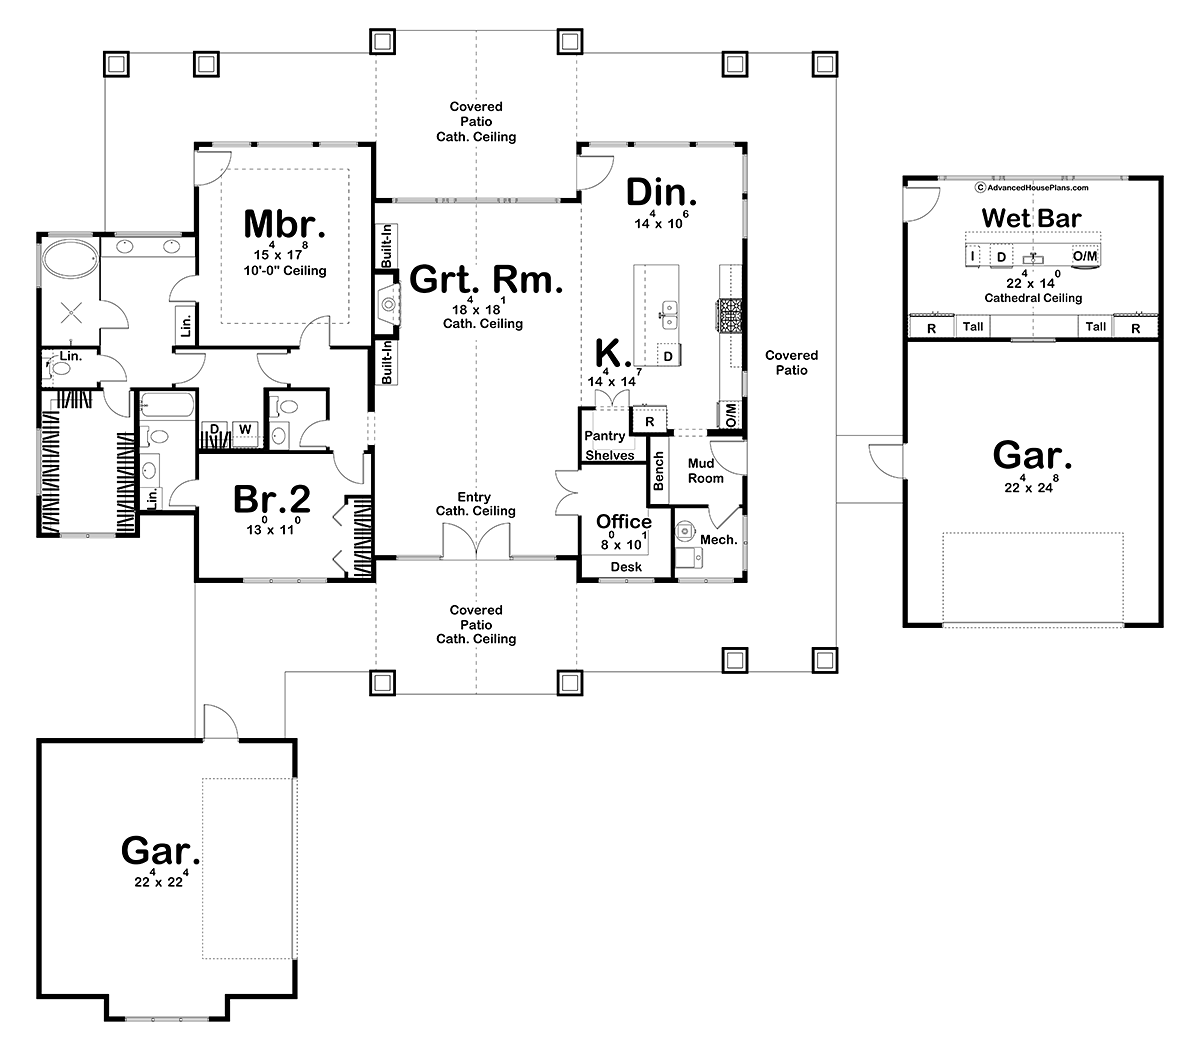 House Plan 44187 Alternate Level One